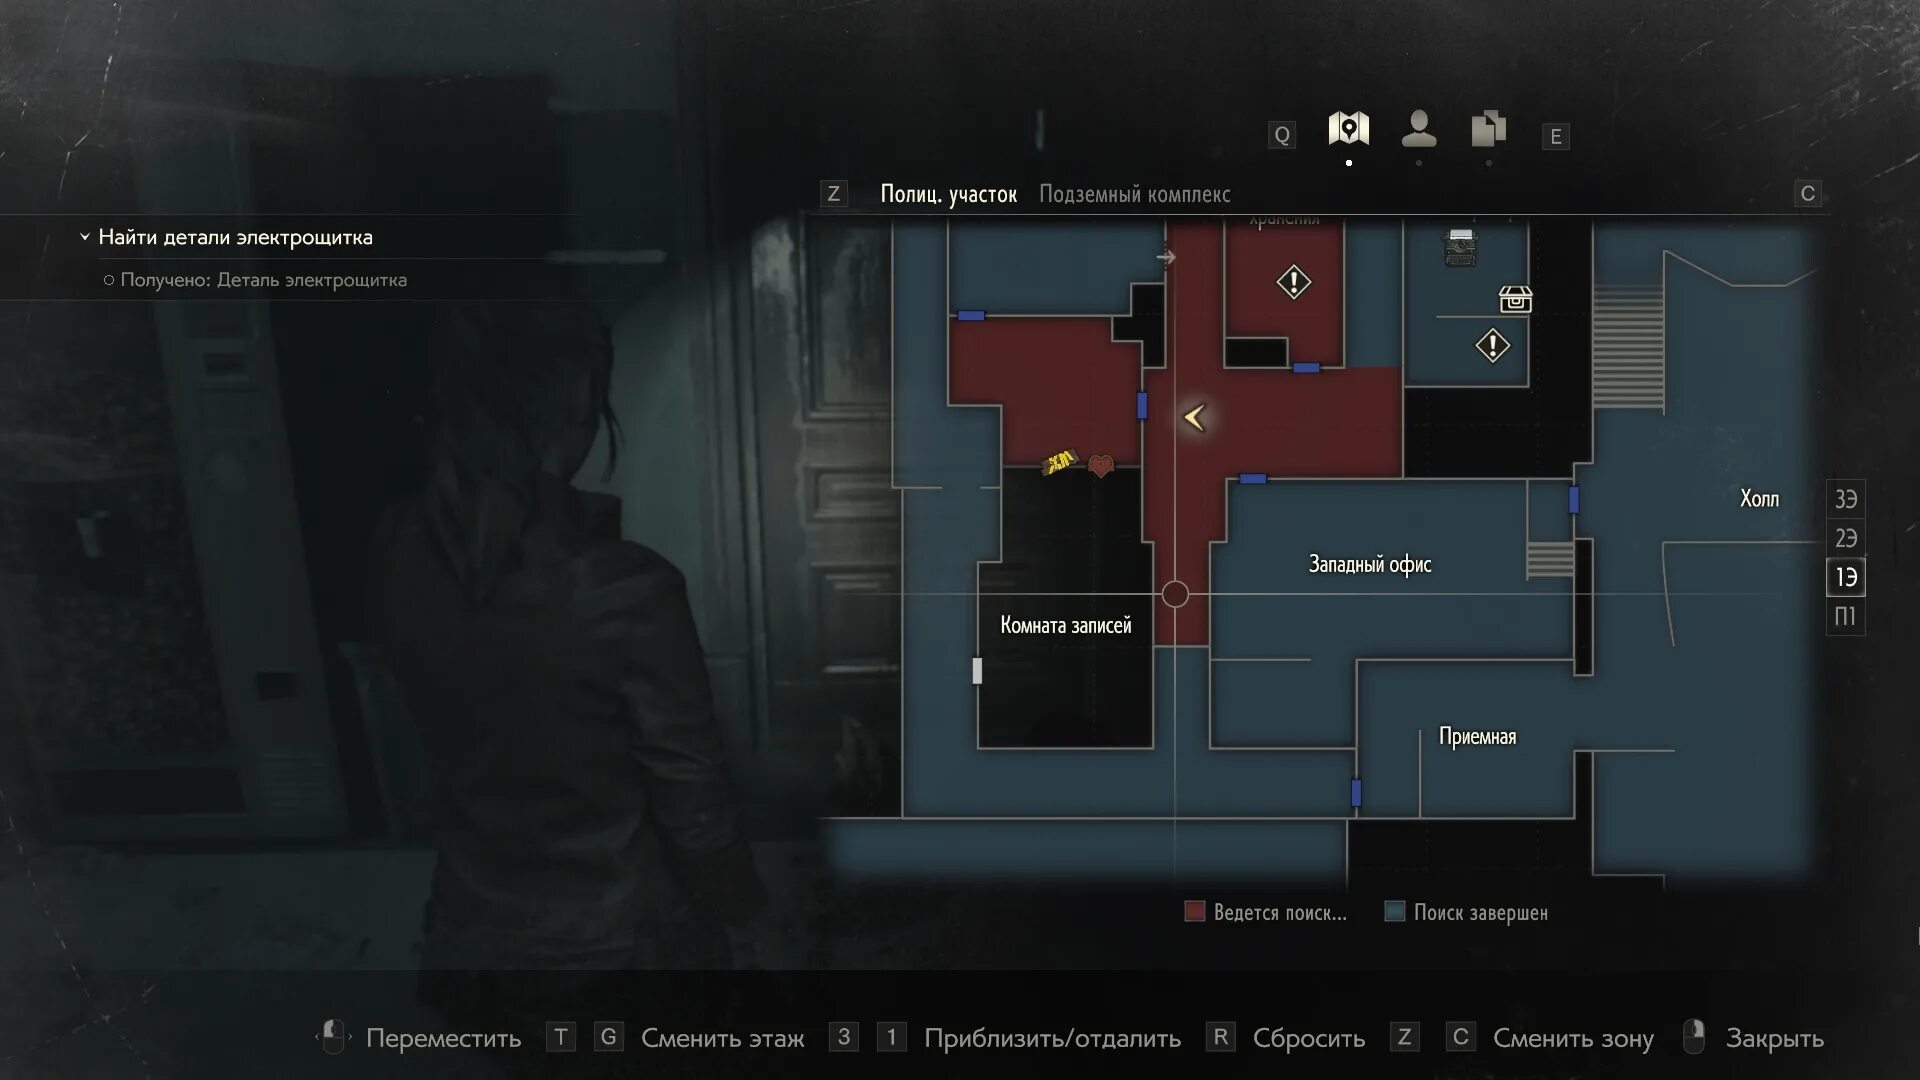 Htpbltyn BDTK rfhnf 2 ремейк. Resident Evil 2 Remake Клэр карта. Операционная комната Resident Evil 2 Remake. Карта резидент ивел 2 ремейк.